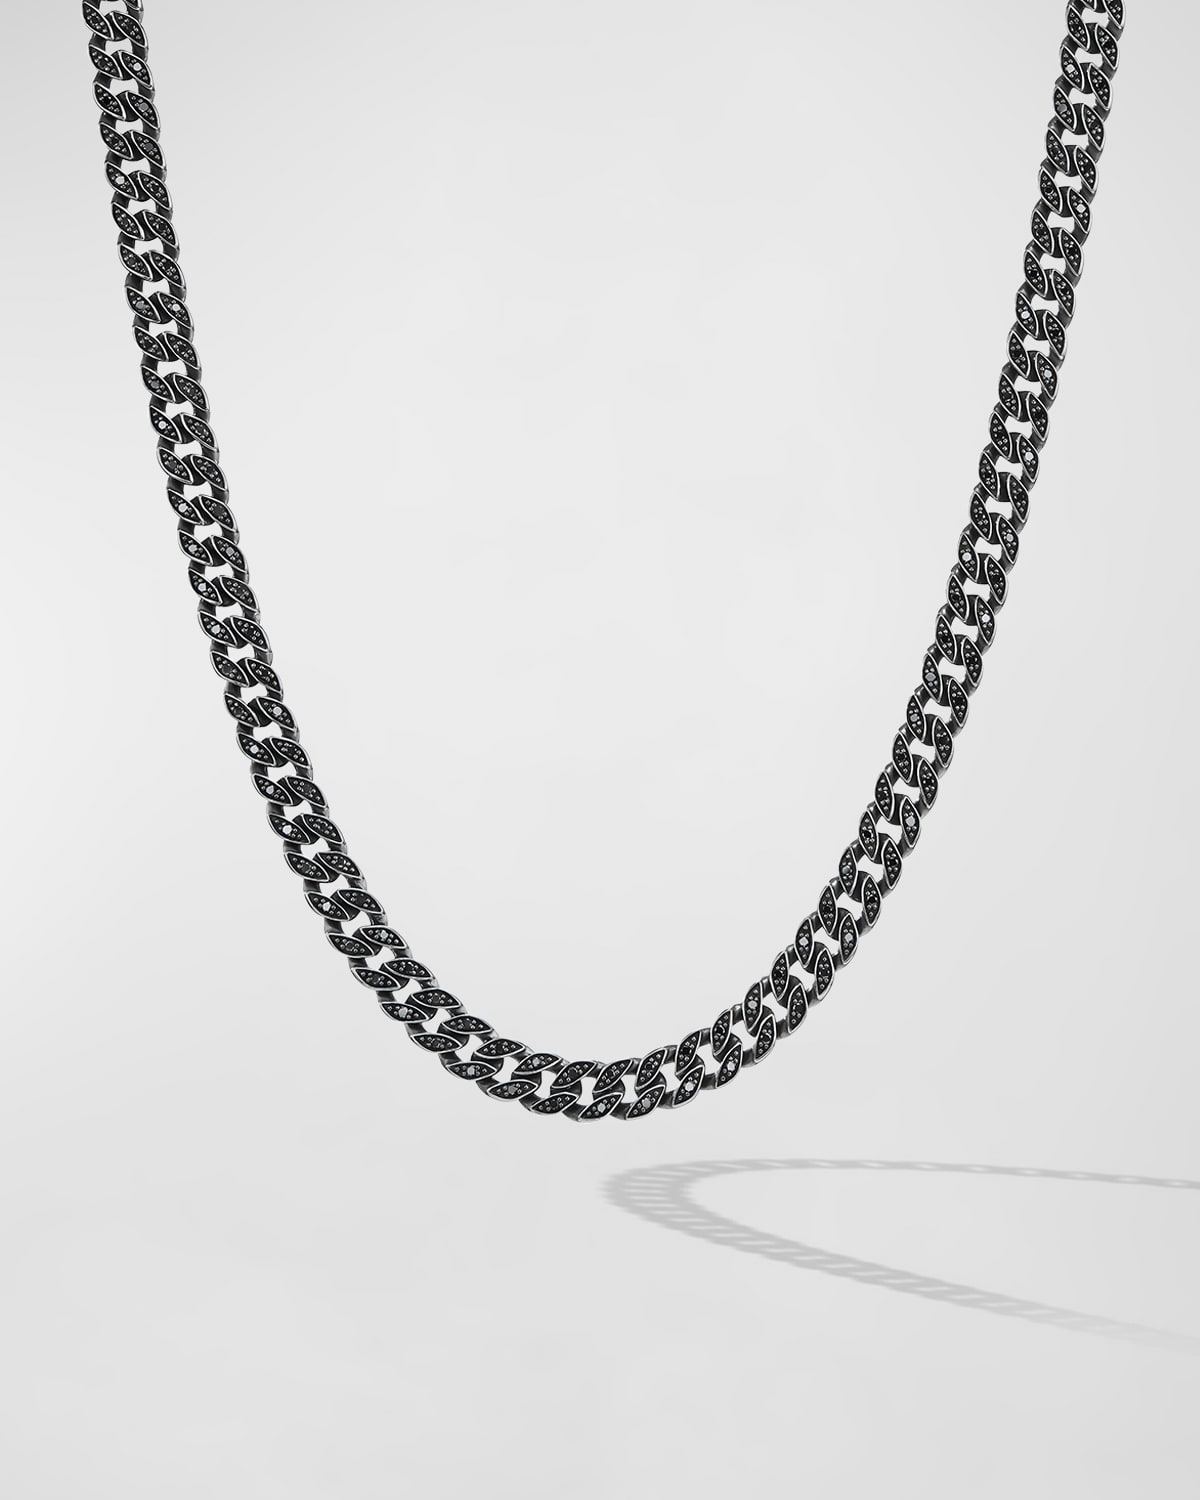 David Yurman Men's Curb Chain Necklace with Diamonds in Silver, 6mm, 20"L